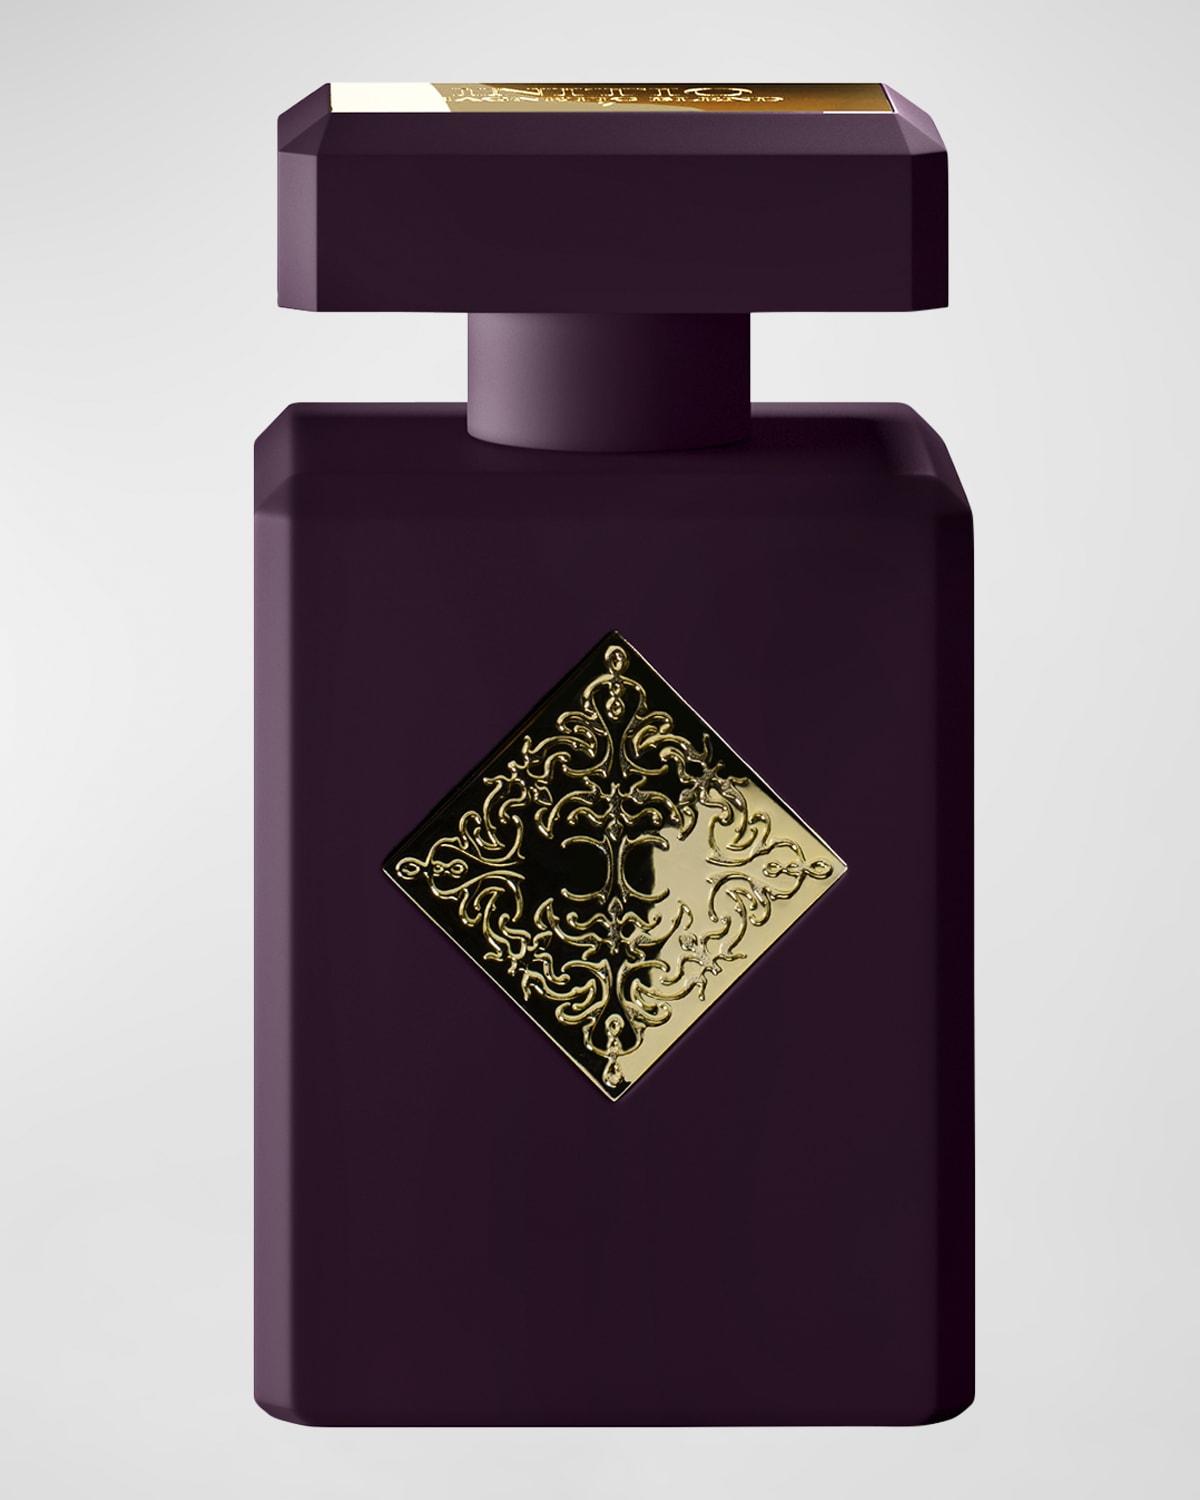 Initio Parfums Prives 3 oz. Atomic Rose Eau de Parfum Spray